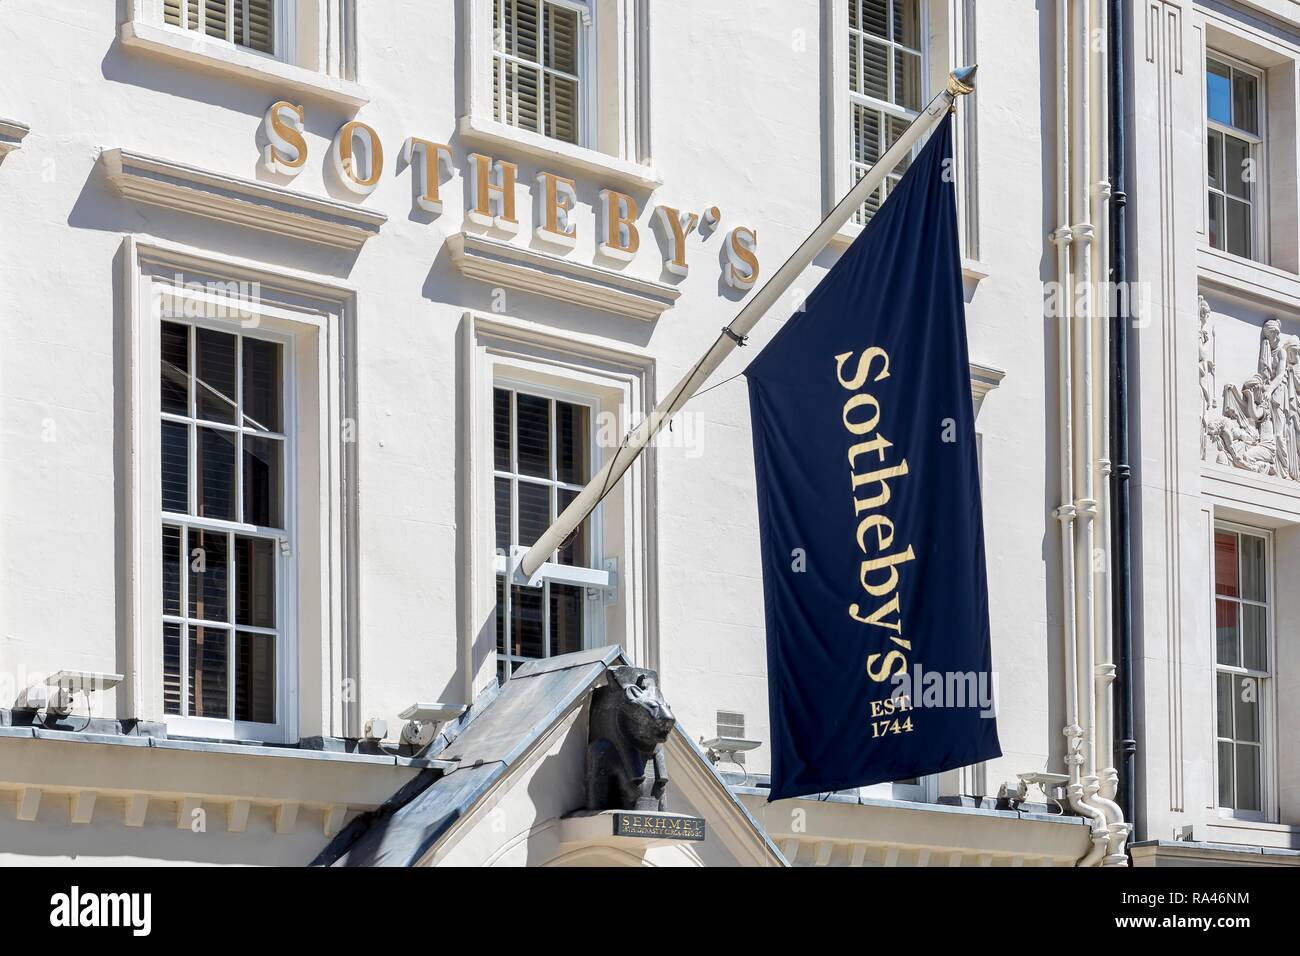 Sotheby's Auction House, London, United Kingdom Stock Photo